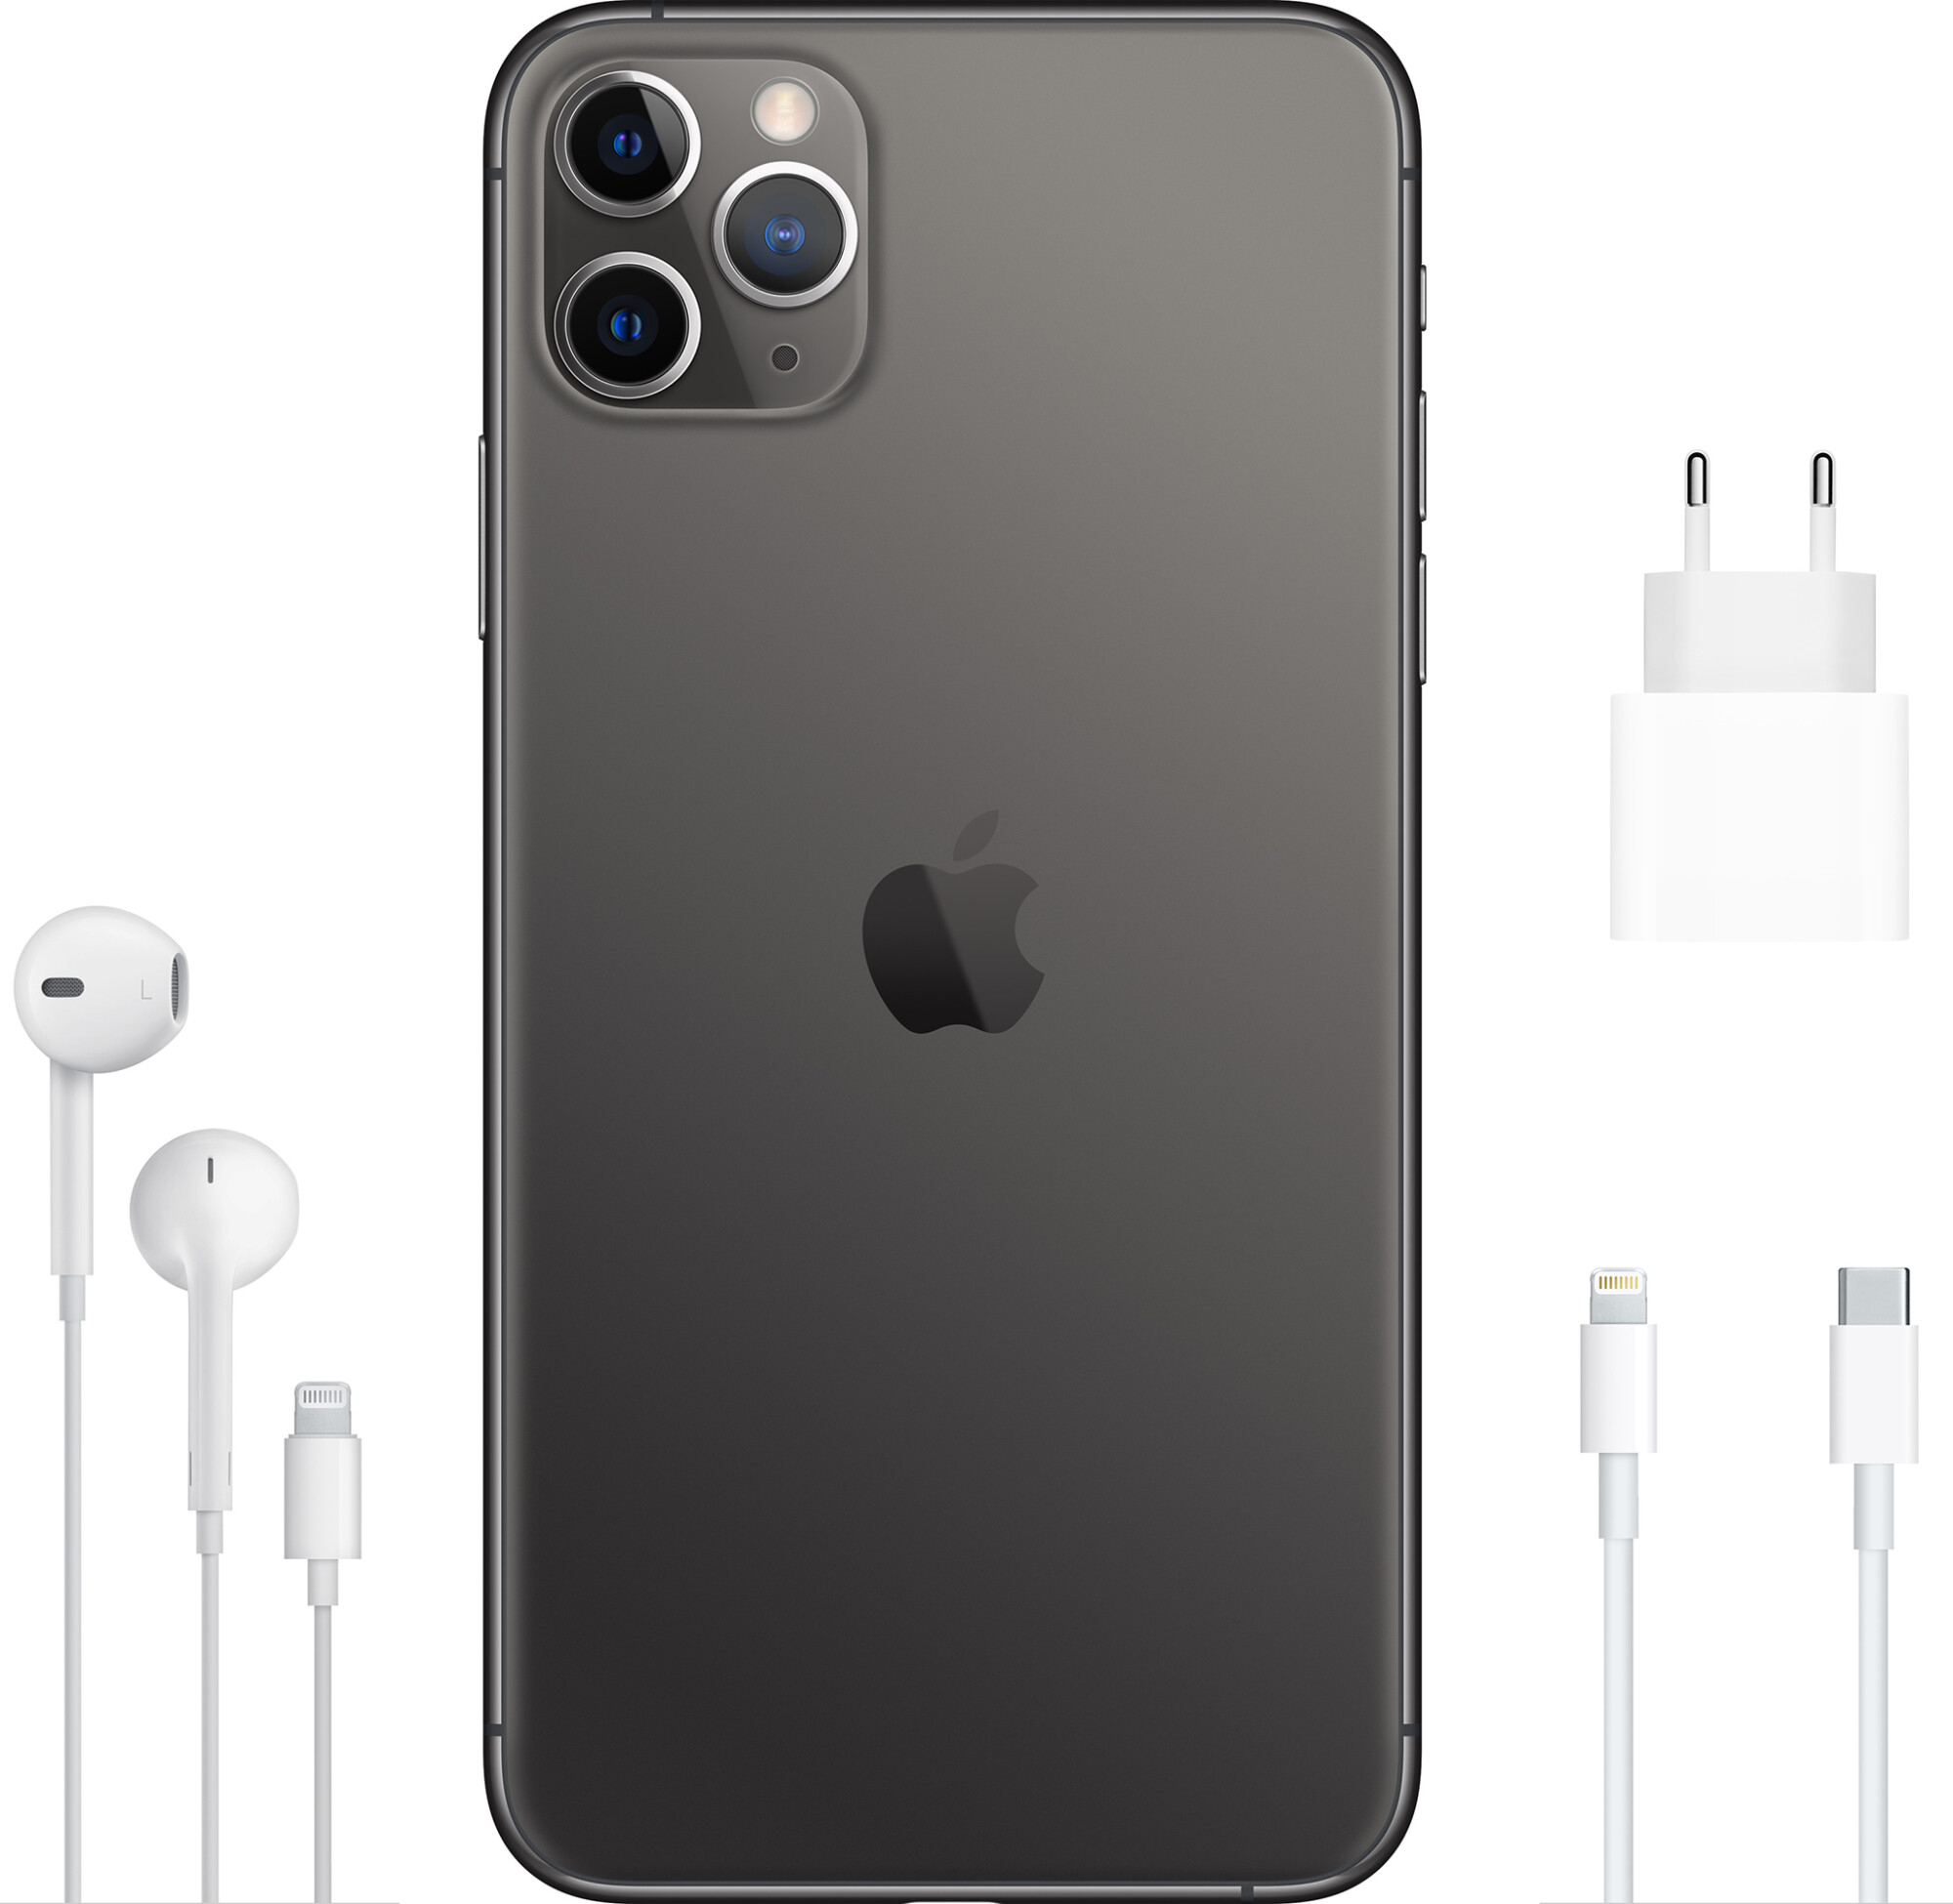  Apple iPhone 11 Pro Max Dual SIM 512GB Space Gray